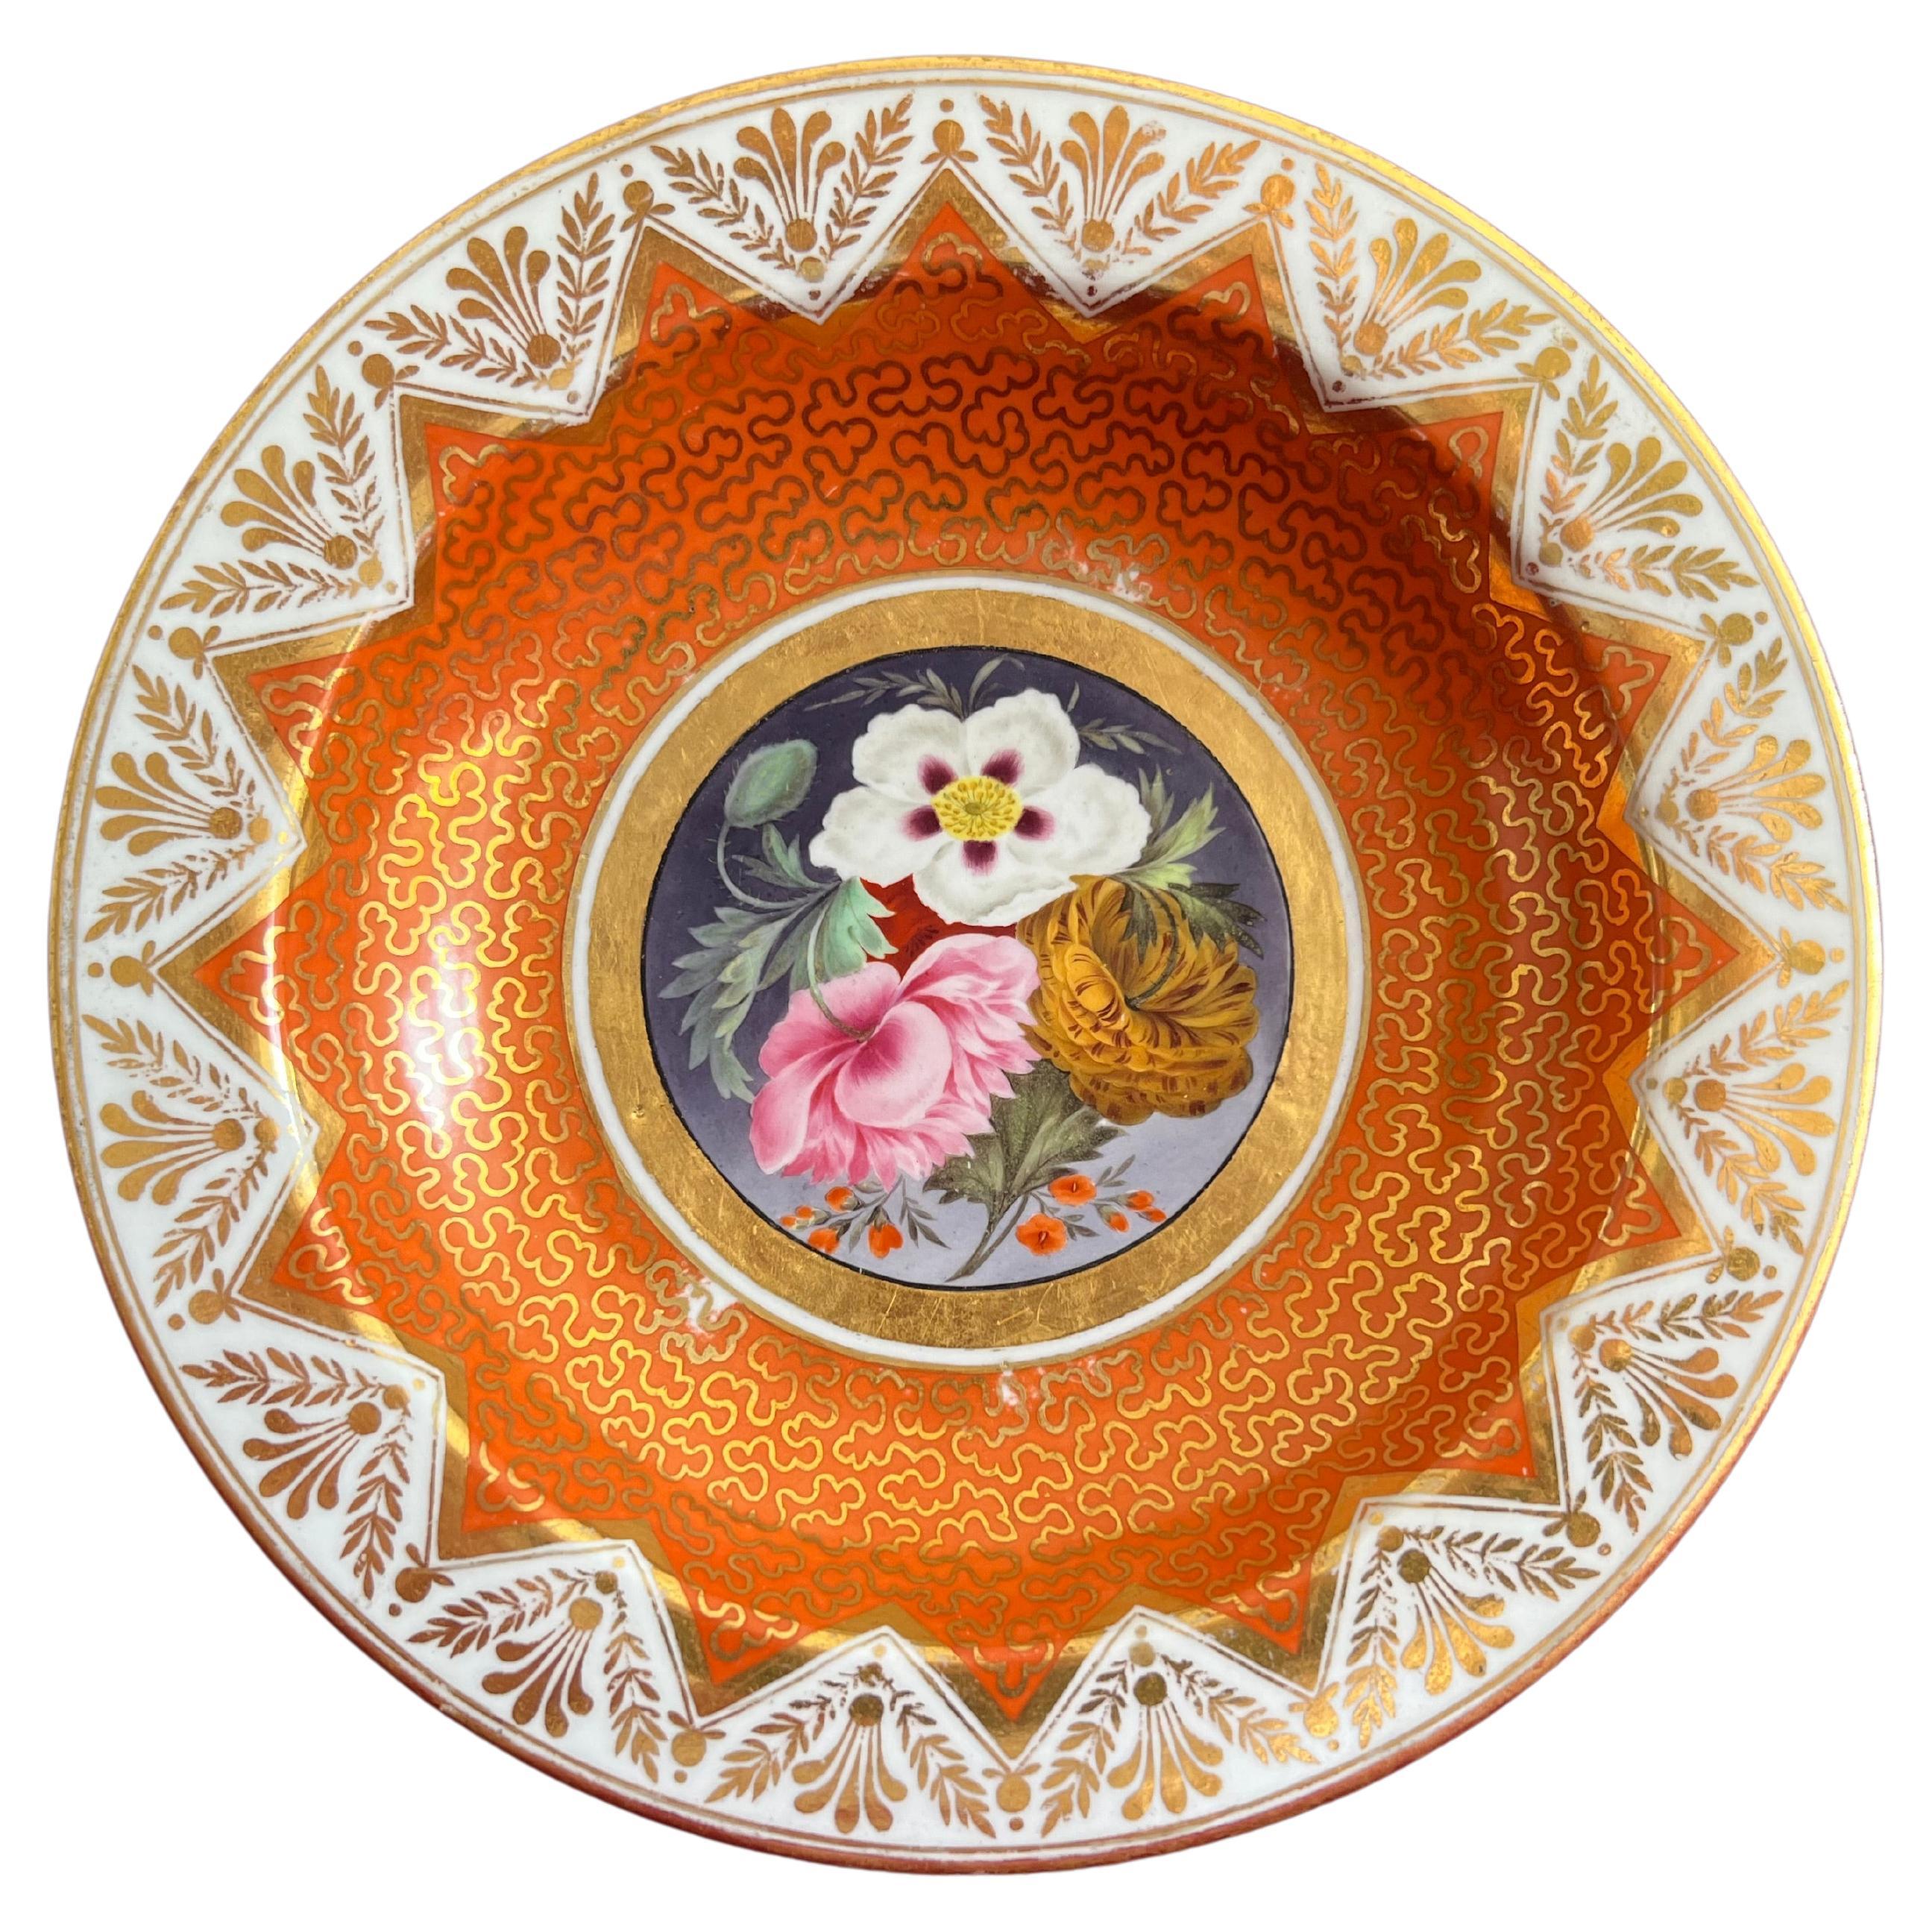 Fine Chamberlain Worcester Porcelain Dessert Plate, c.1815